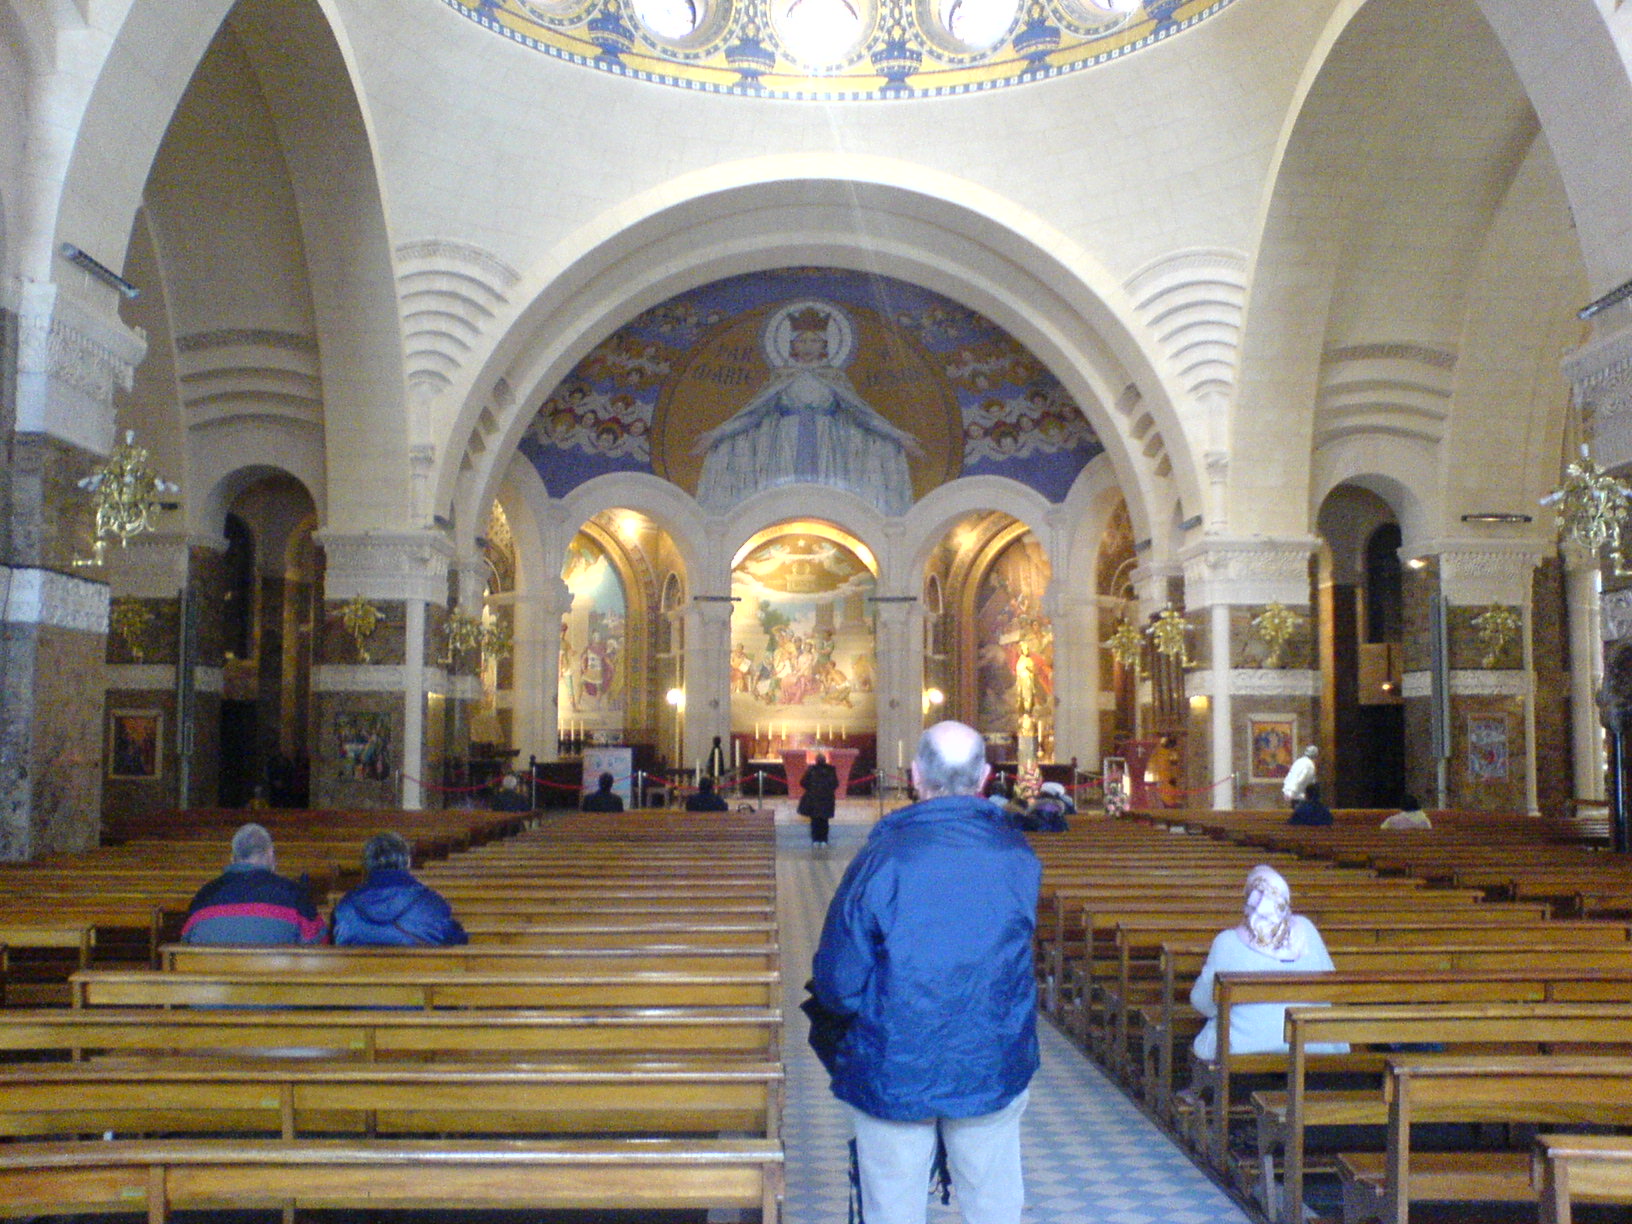 File:Inside the Rosary Basilica, Lourdes.JPG - Wikimedia Commons